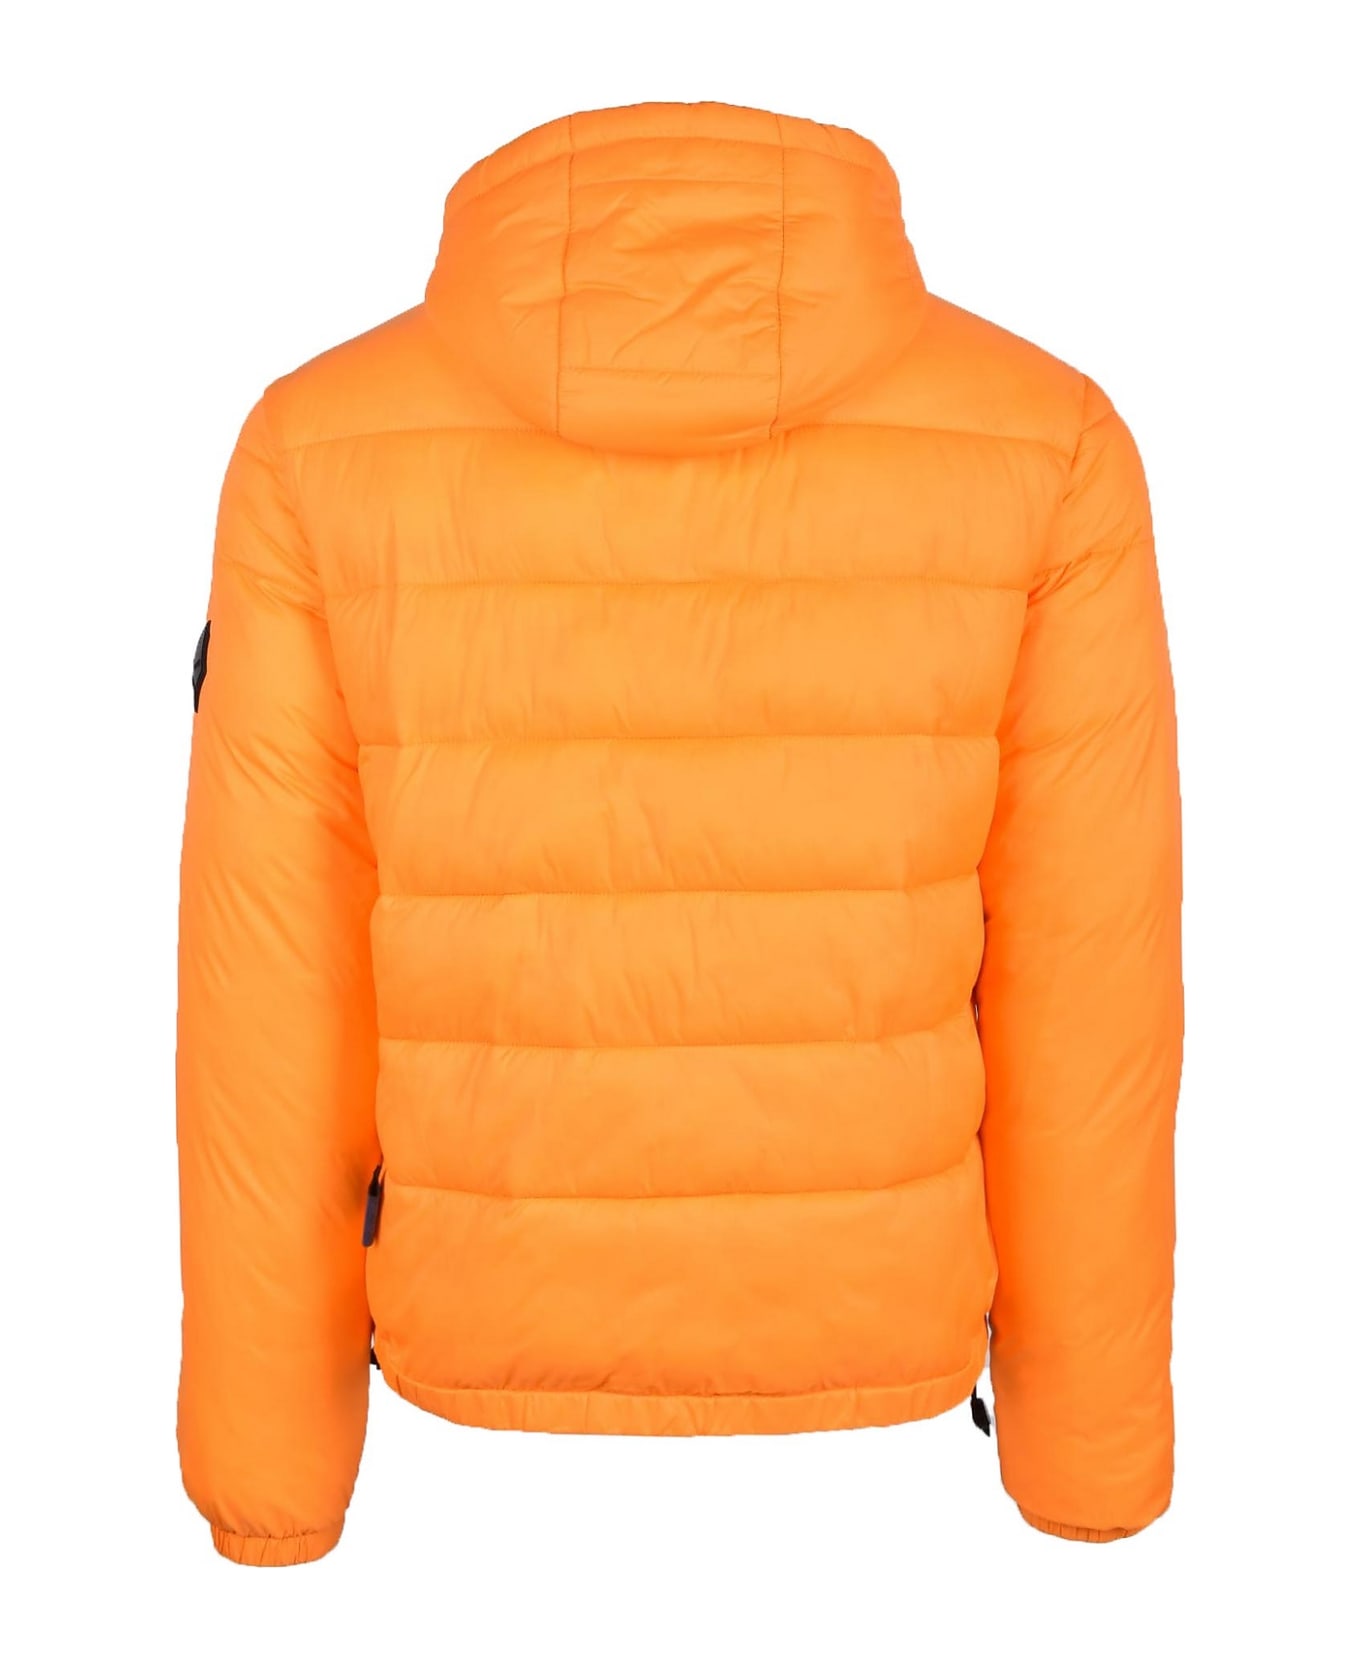 Kejo Men's Orange Padded Jacket - Orange